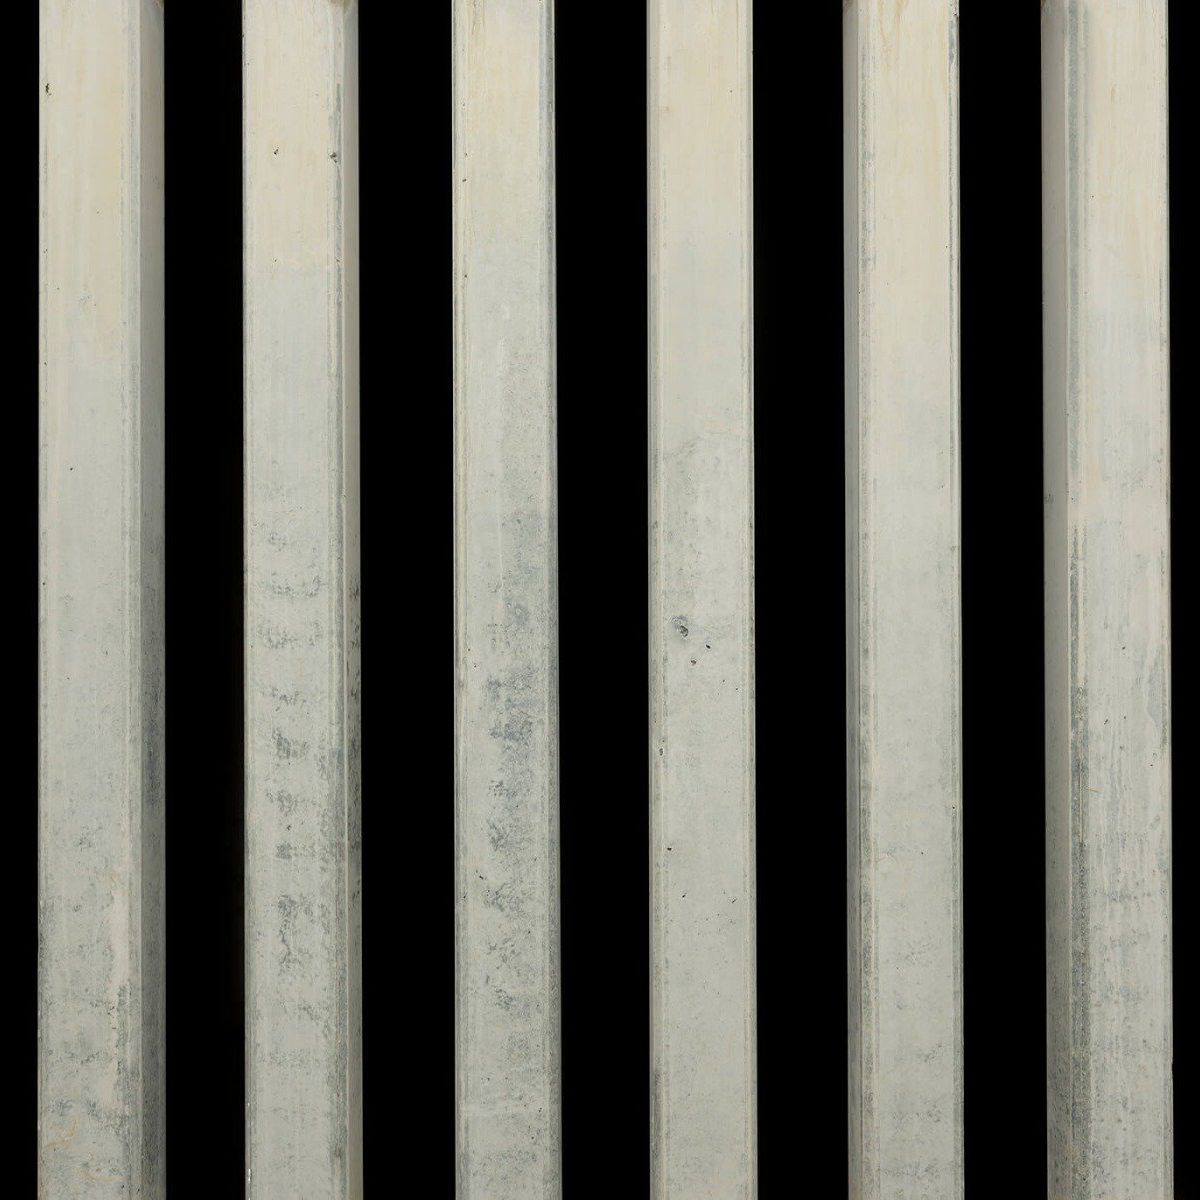 Concrete pillars